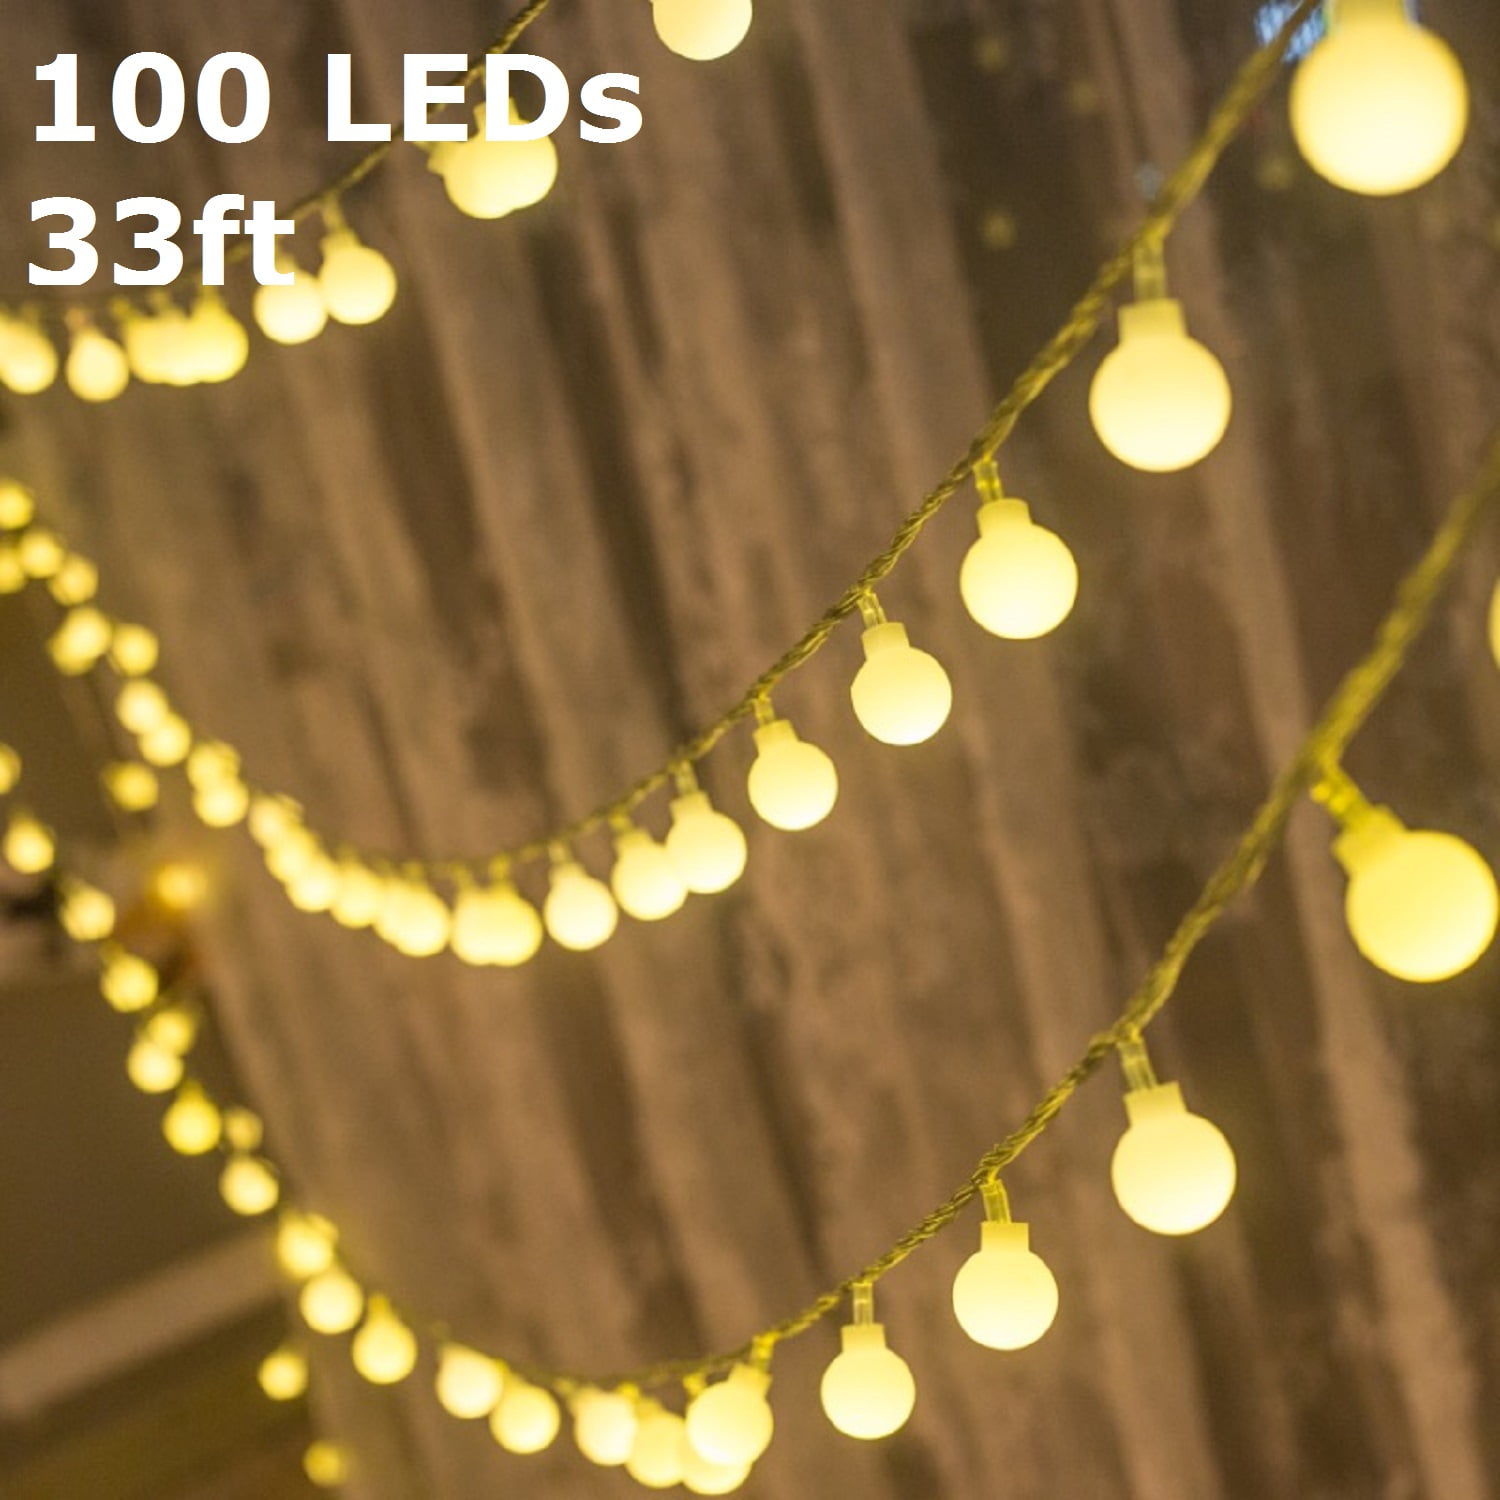 100 LED Garden Solar String Lights Multi colored Summer 2018 